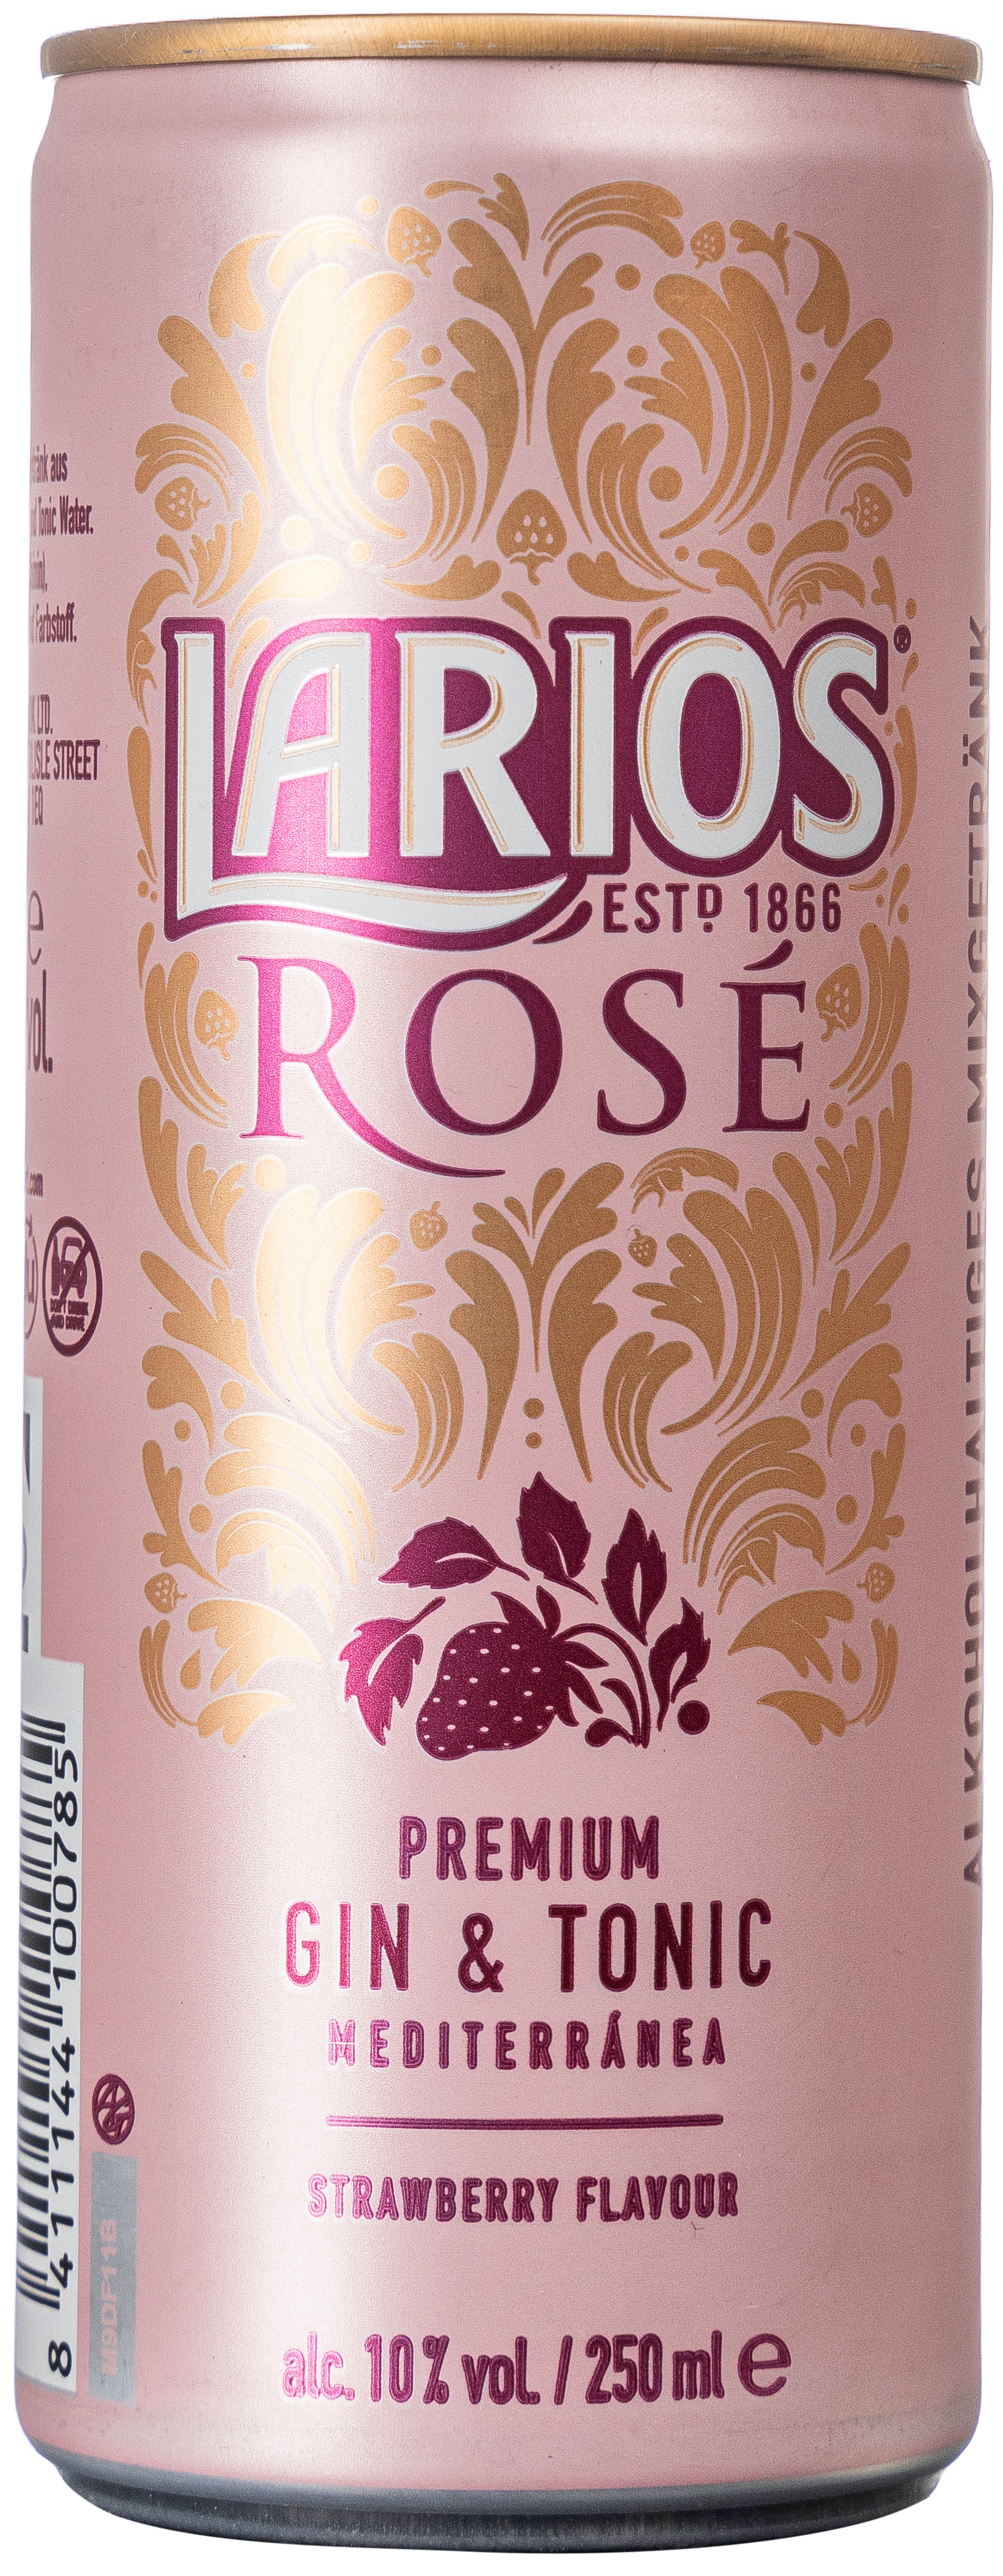 Larios Rosé Gin & Tonic Strawberry 10% vol. 0,25L EINWEG 